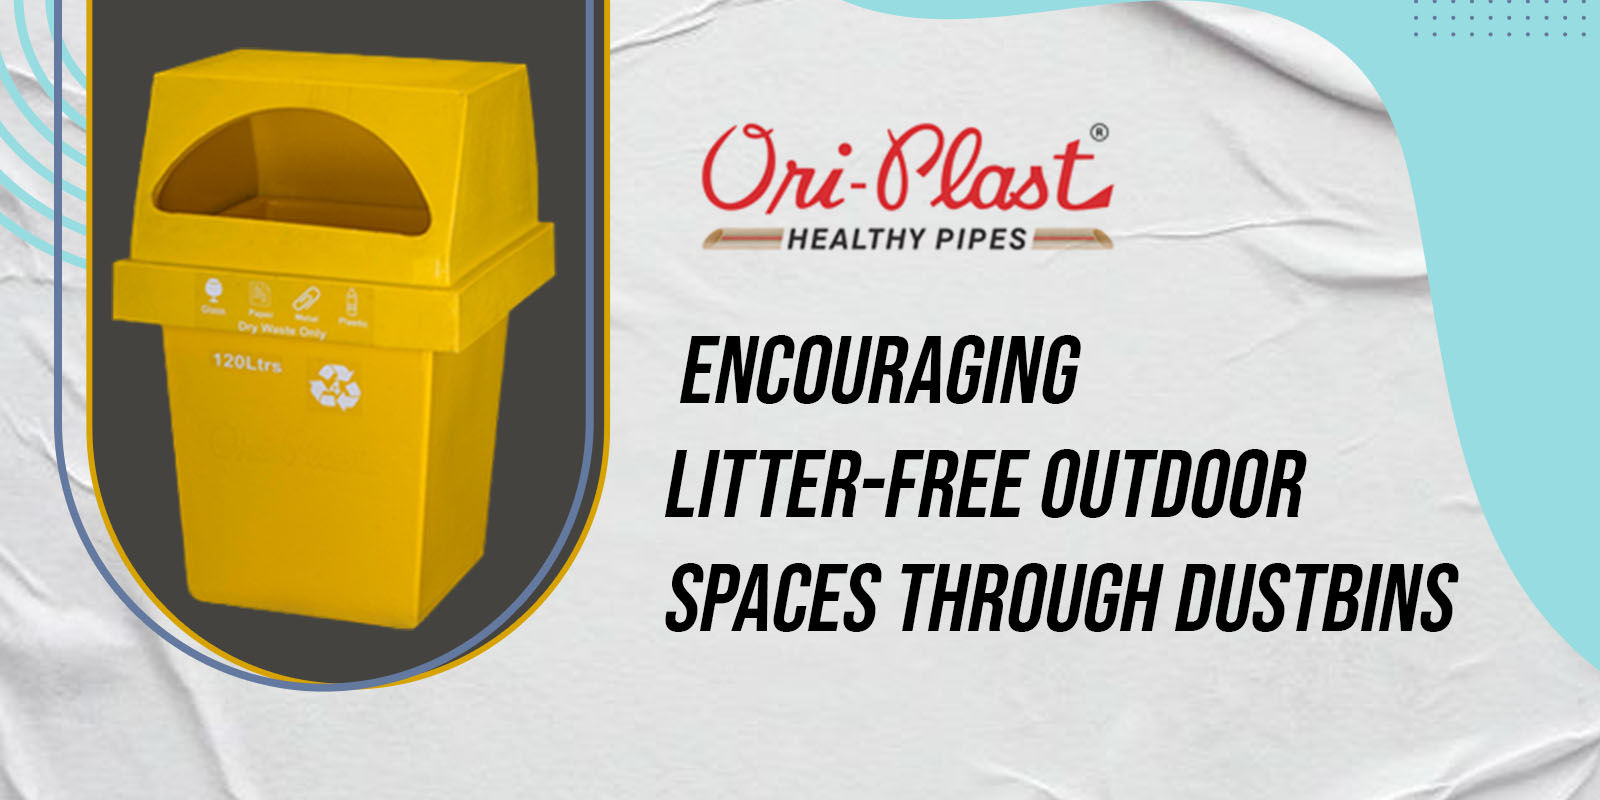 Outdoor dustbins by oriplast